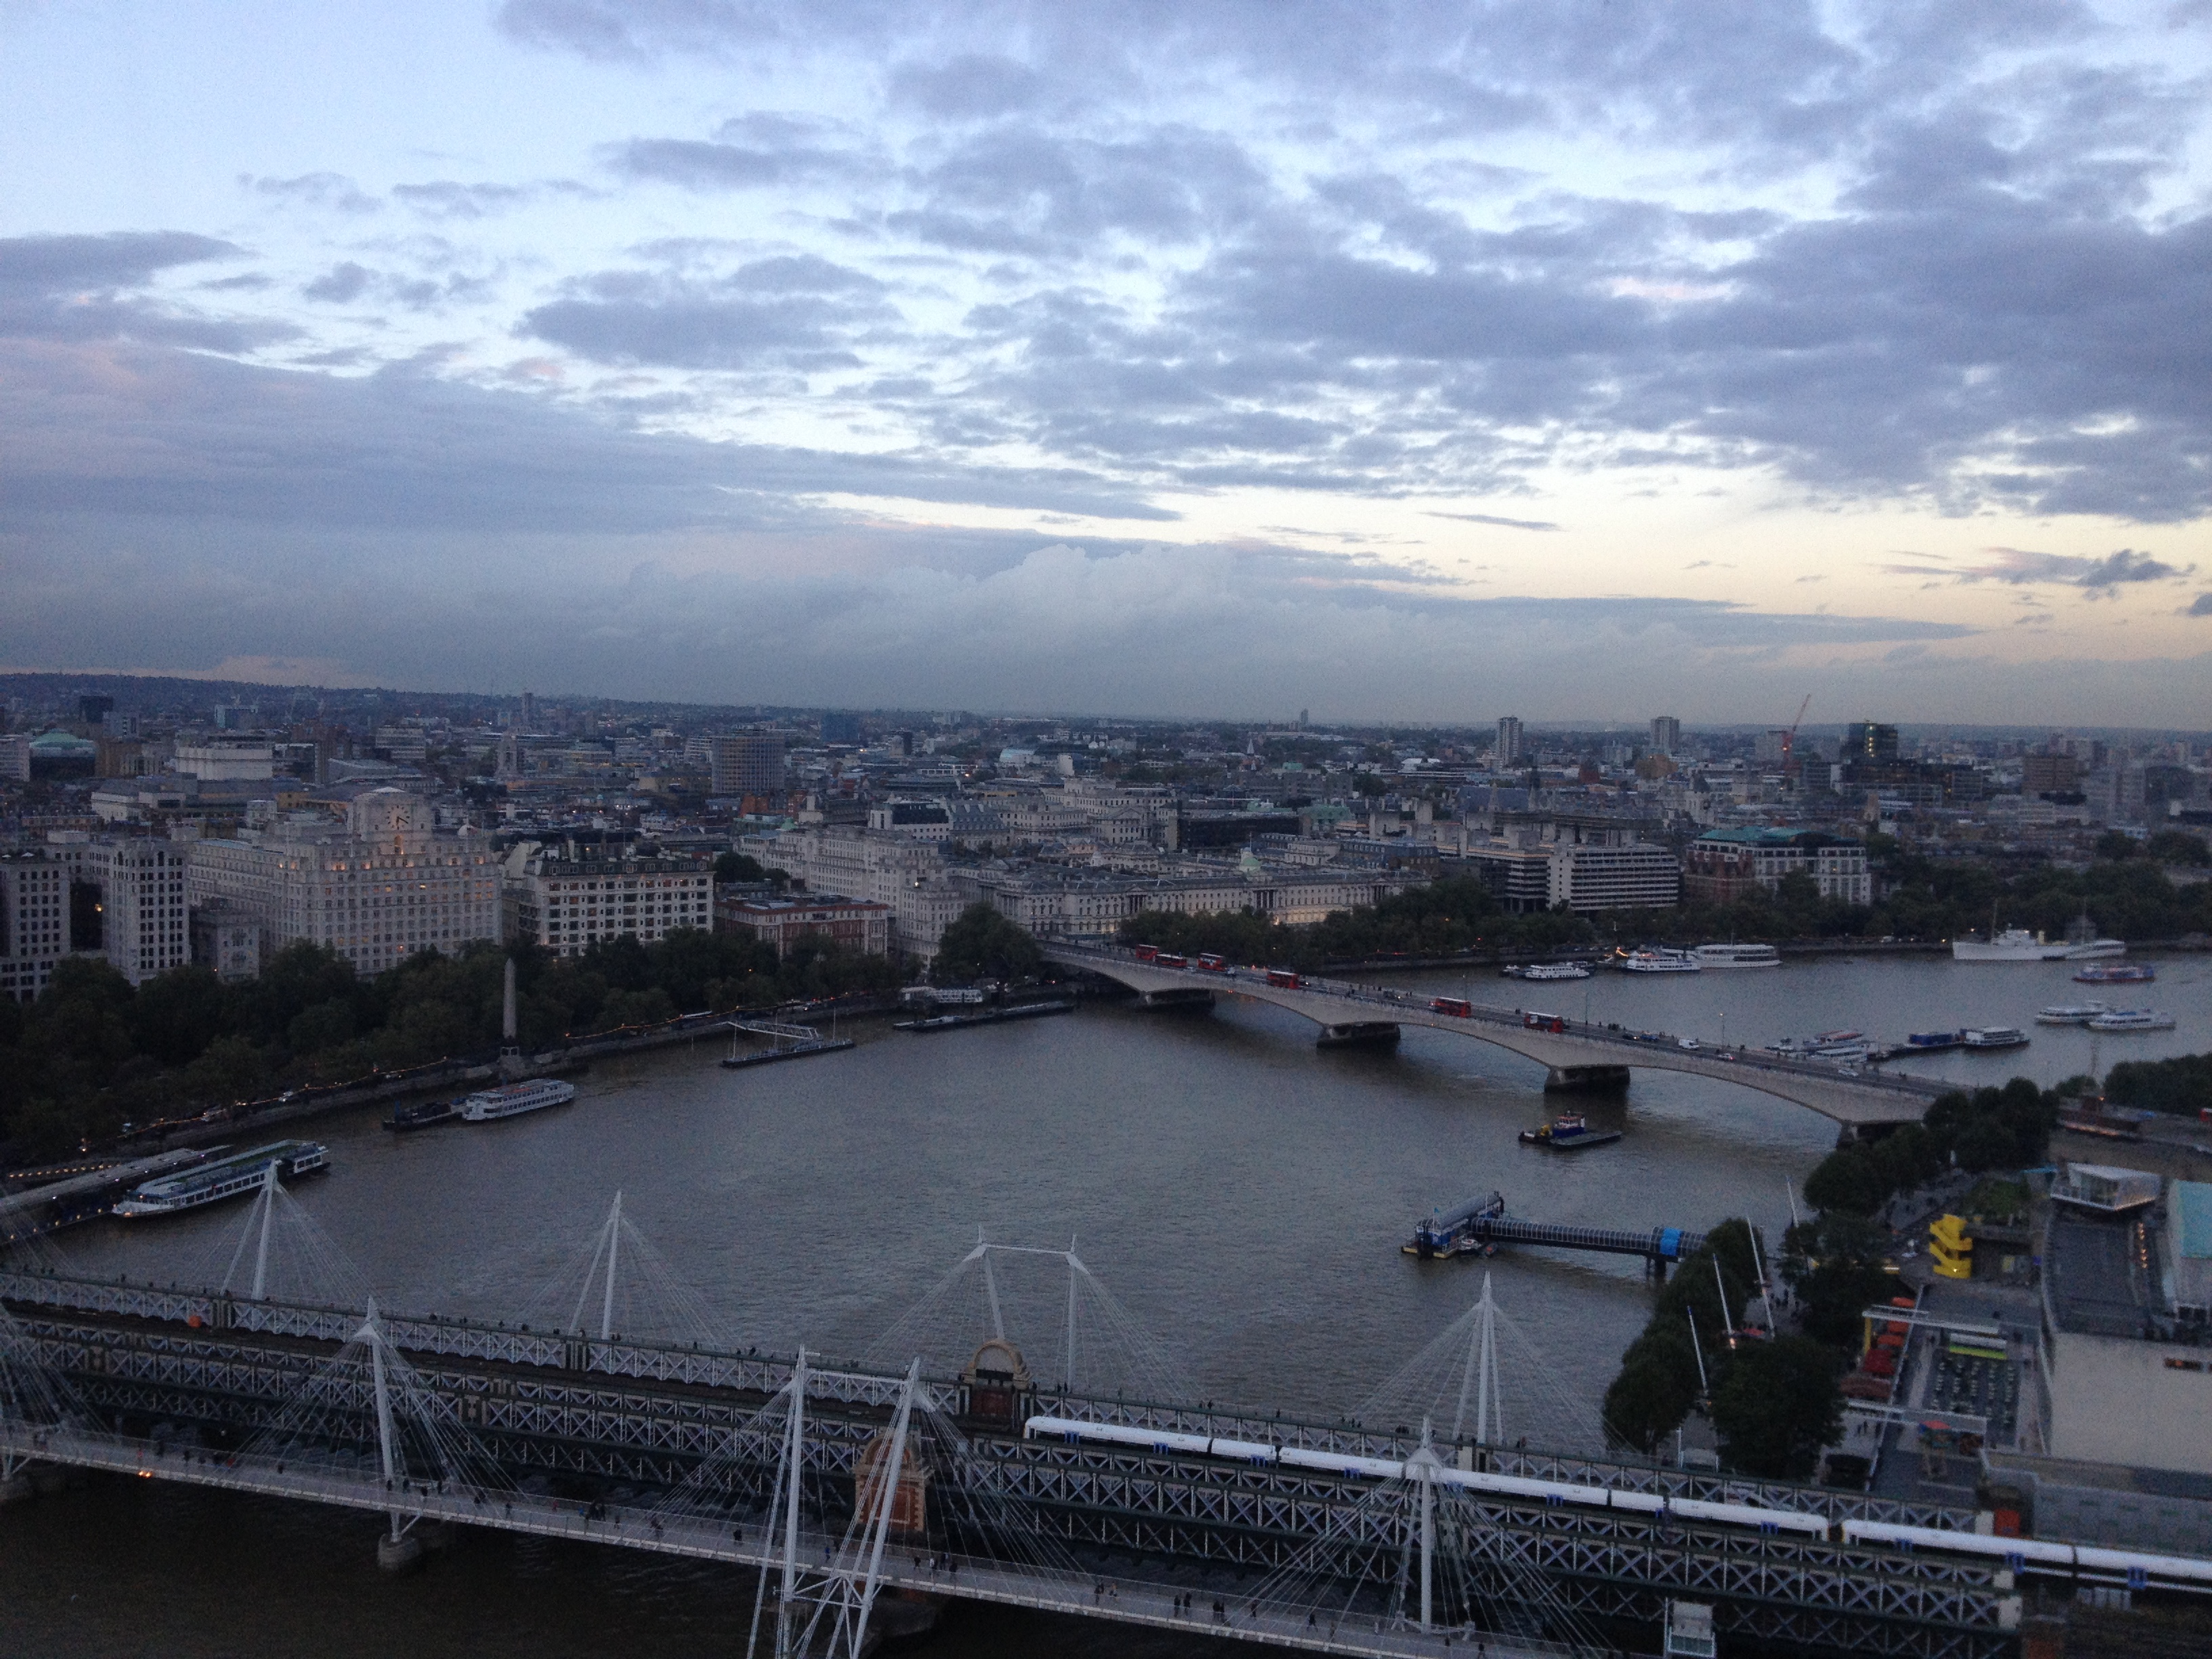 Incredible view across London